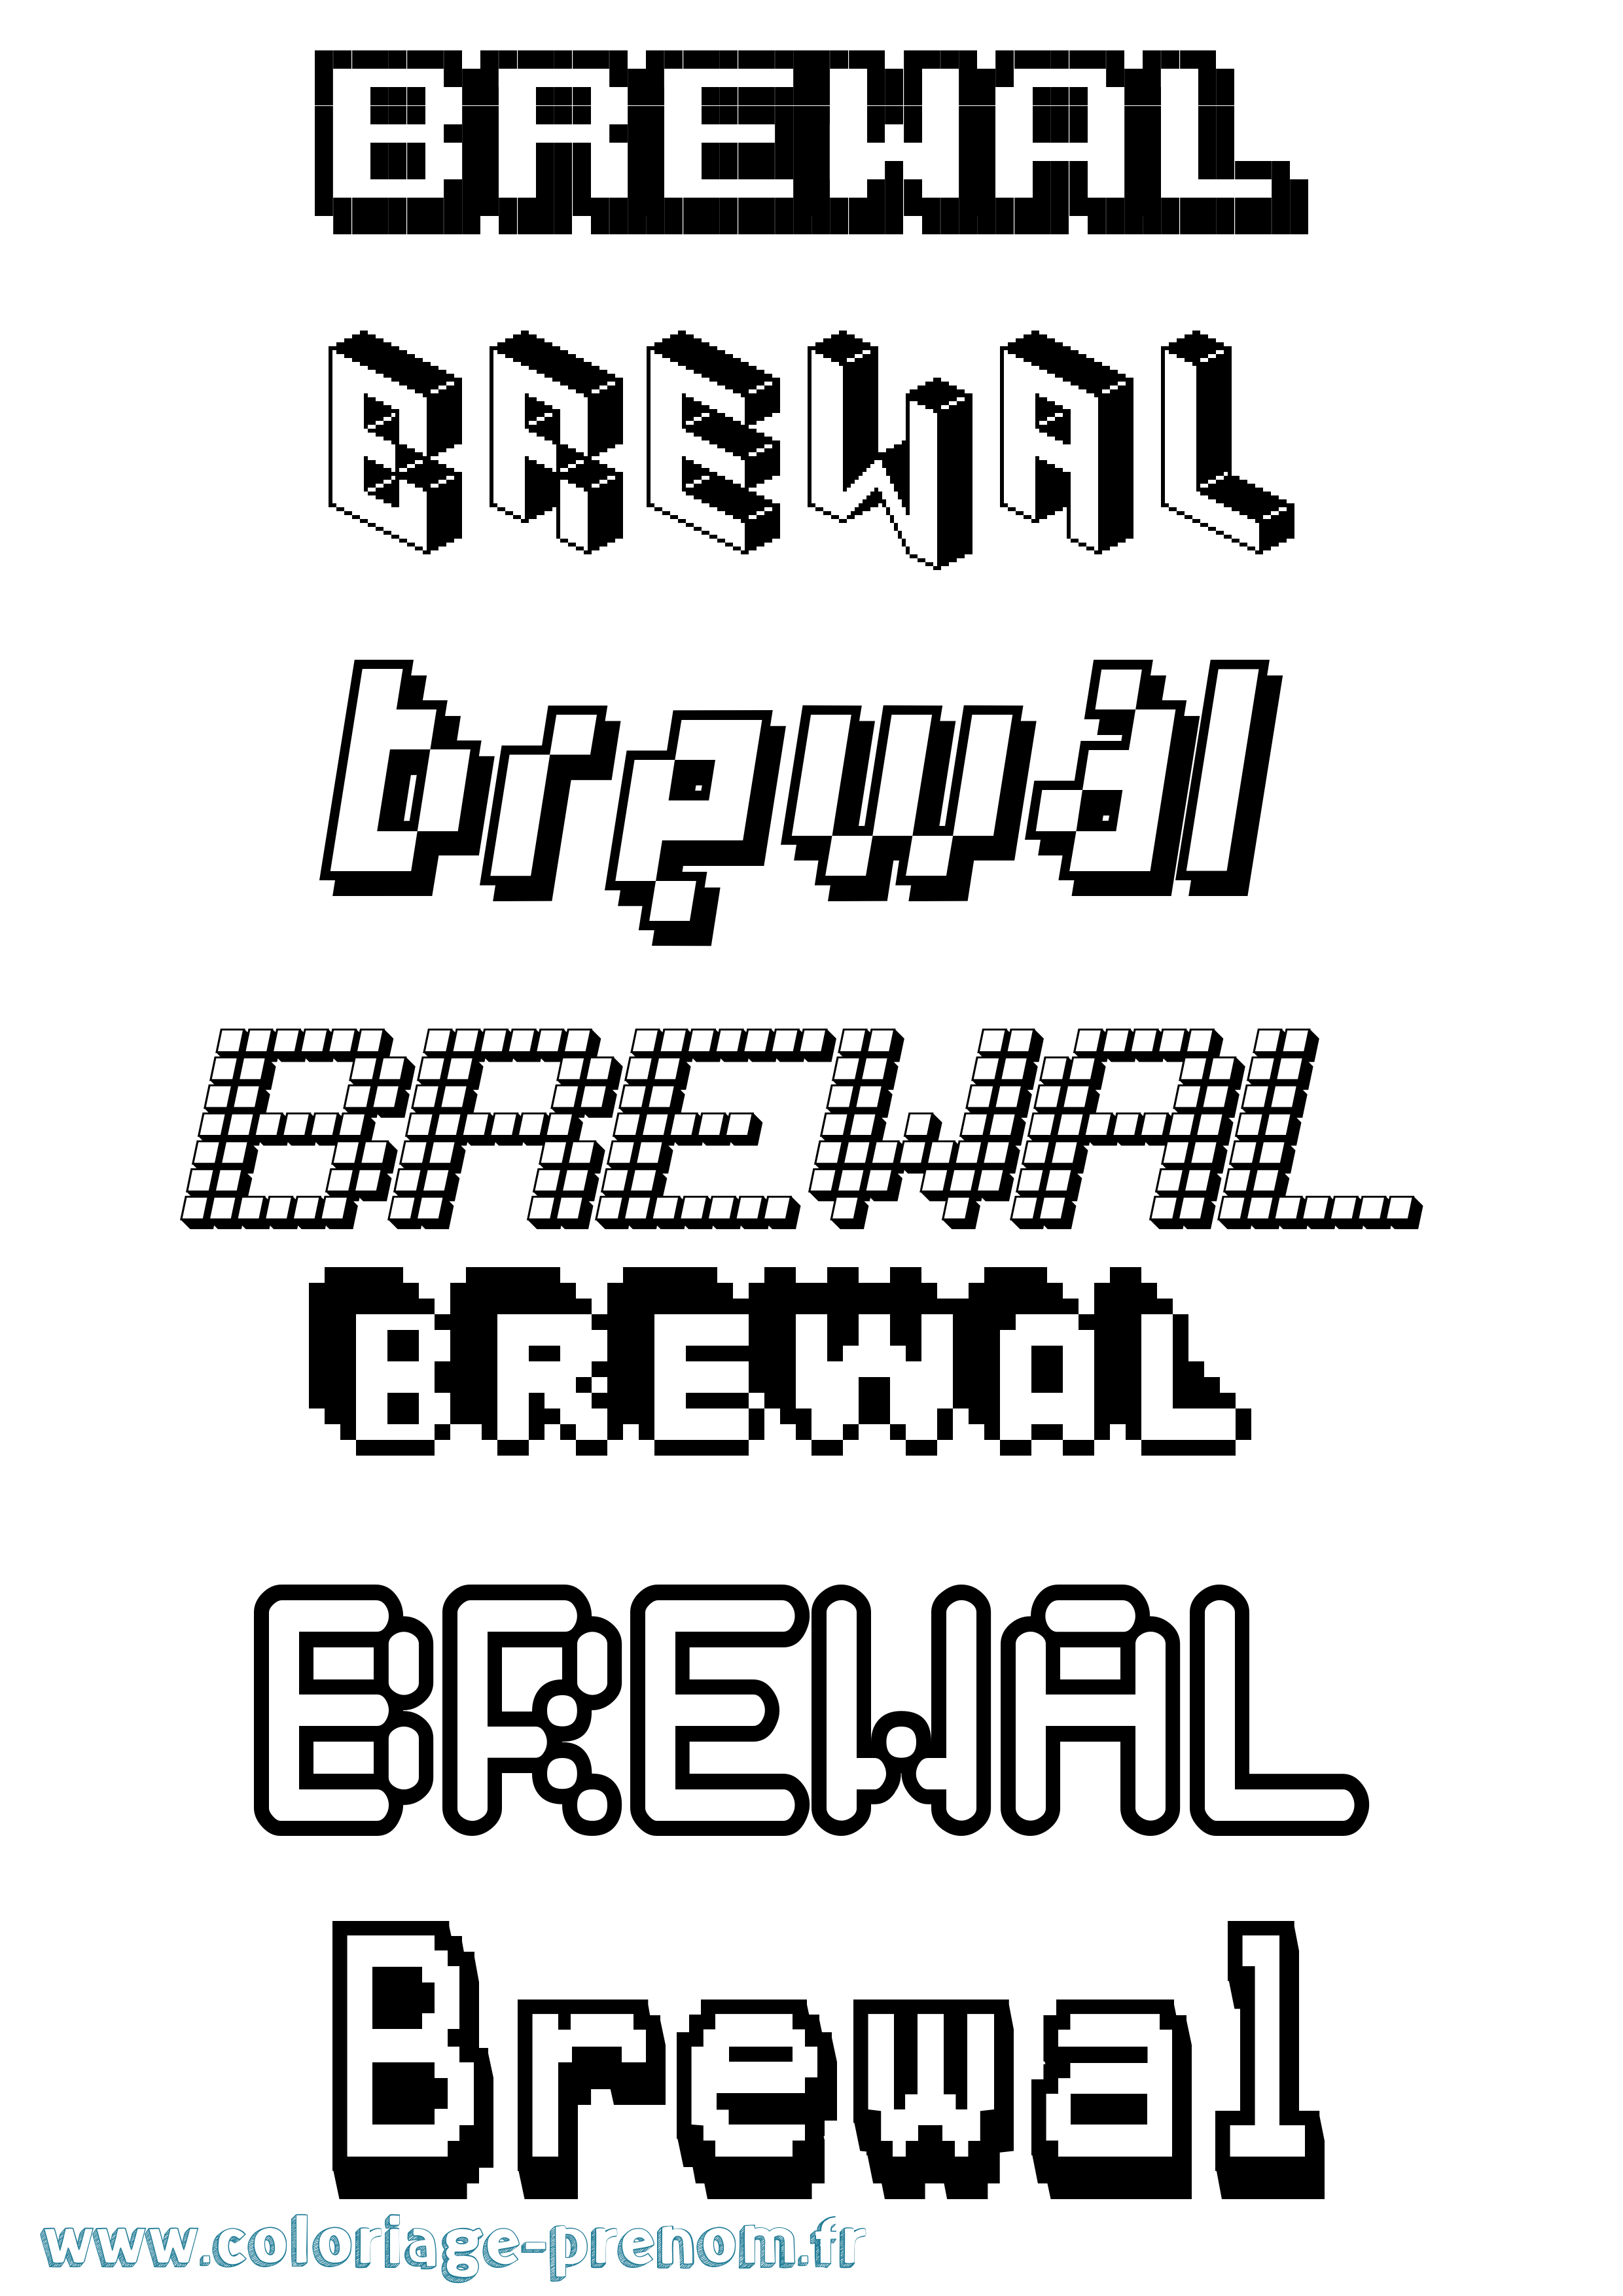 Coloriage prénom Brewal Pixel